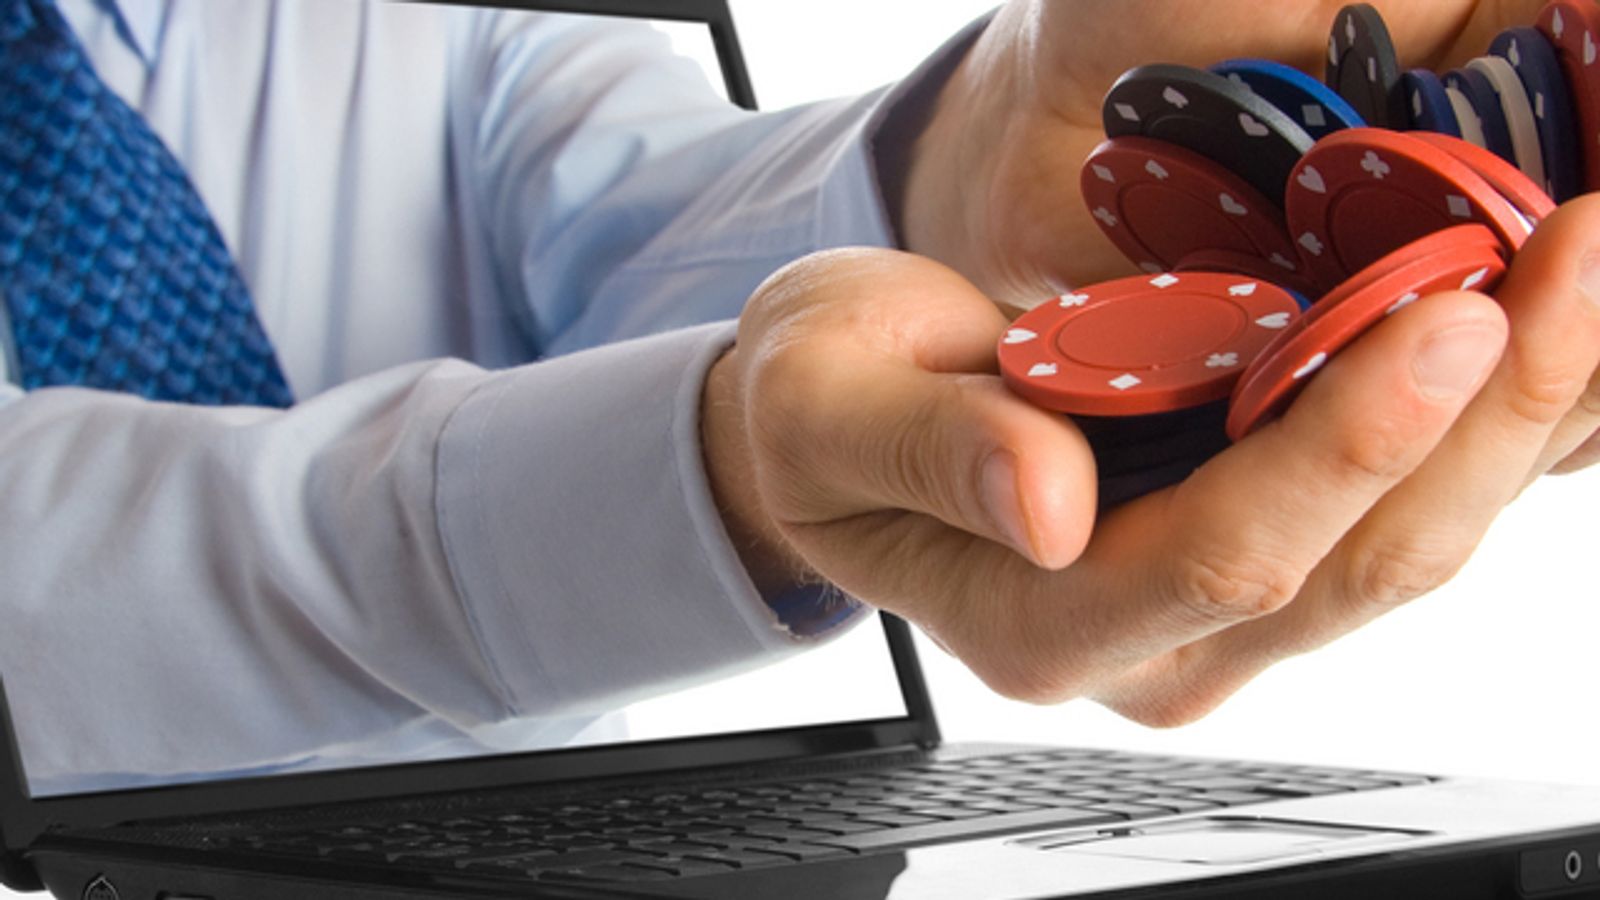 Bill to Lift Internet Gambling Due this Week